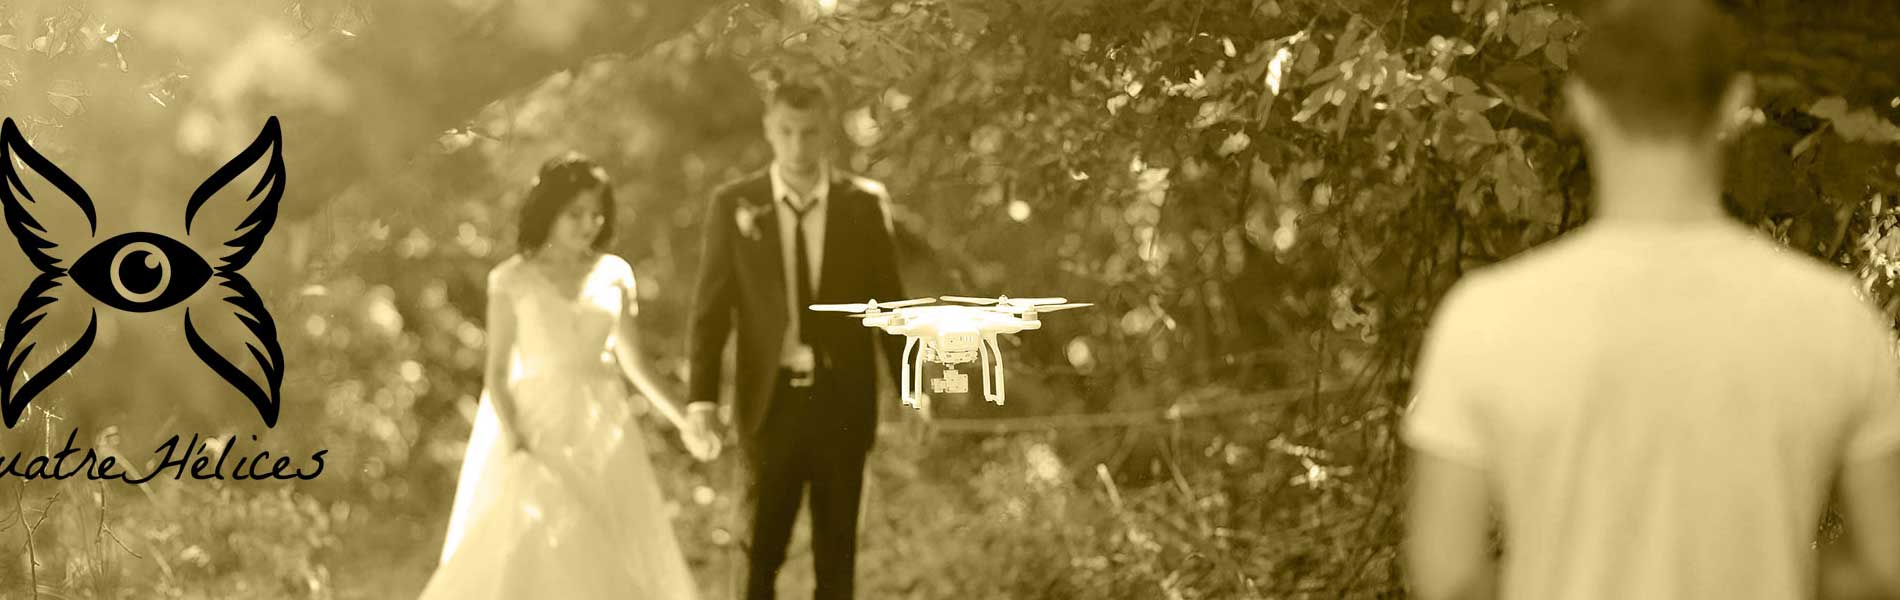 Prix photo mariage drone